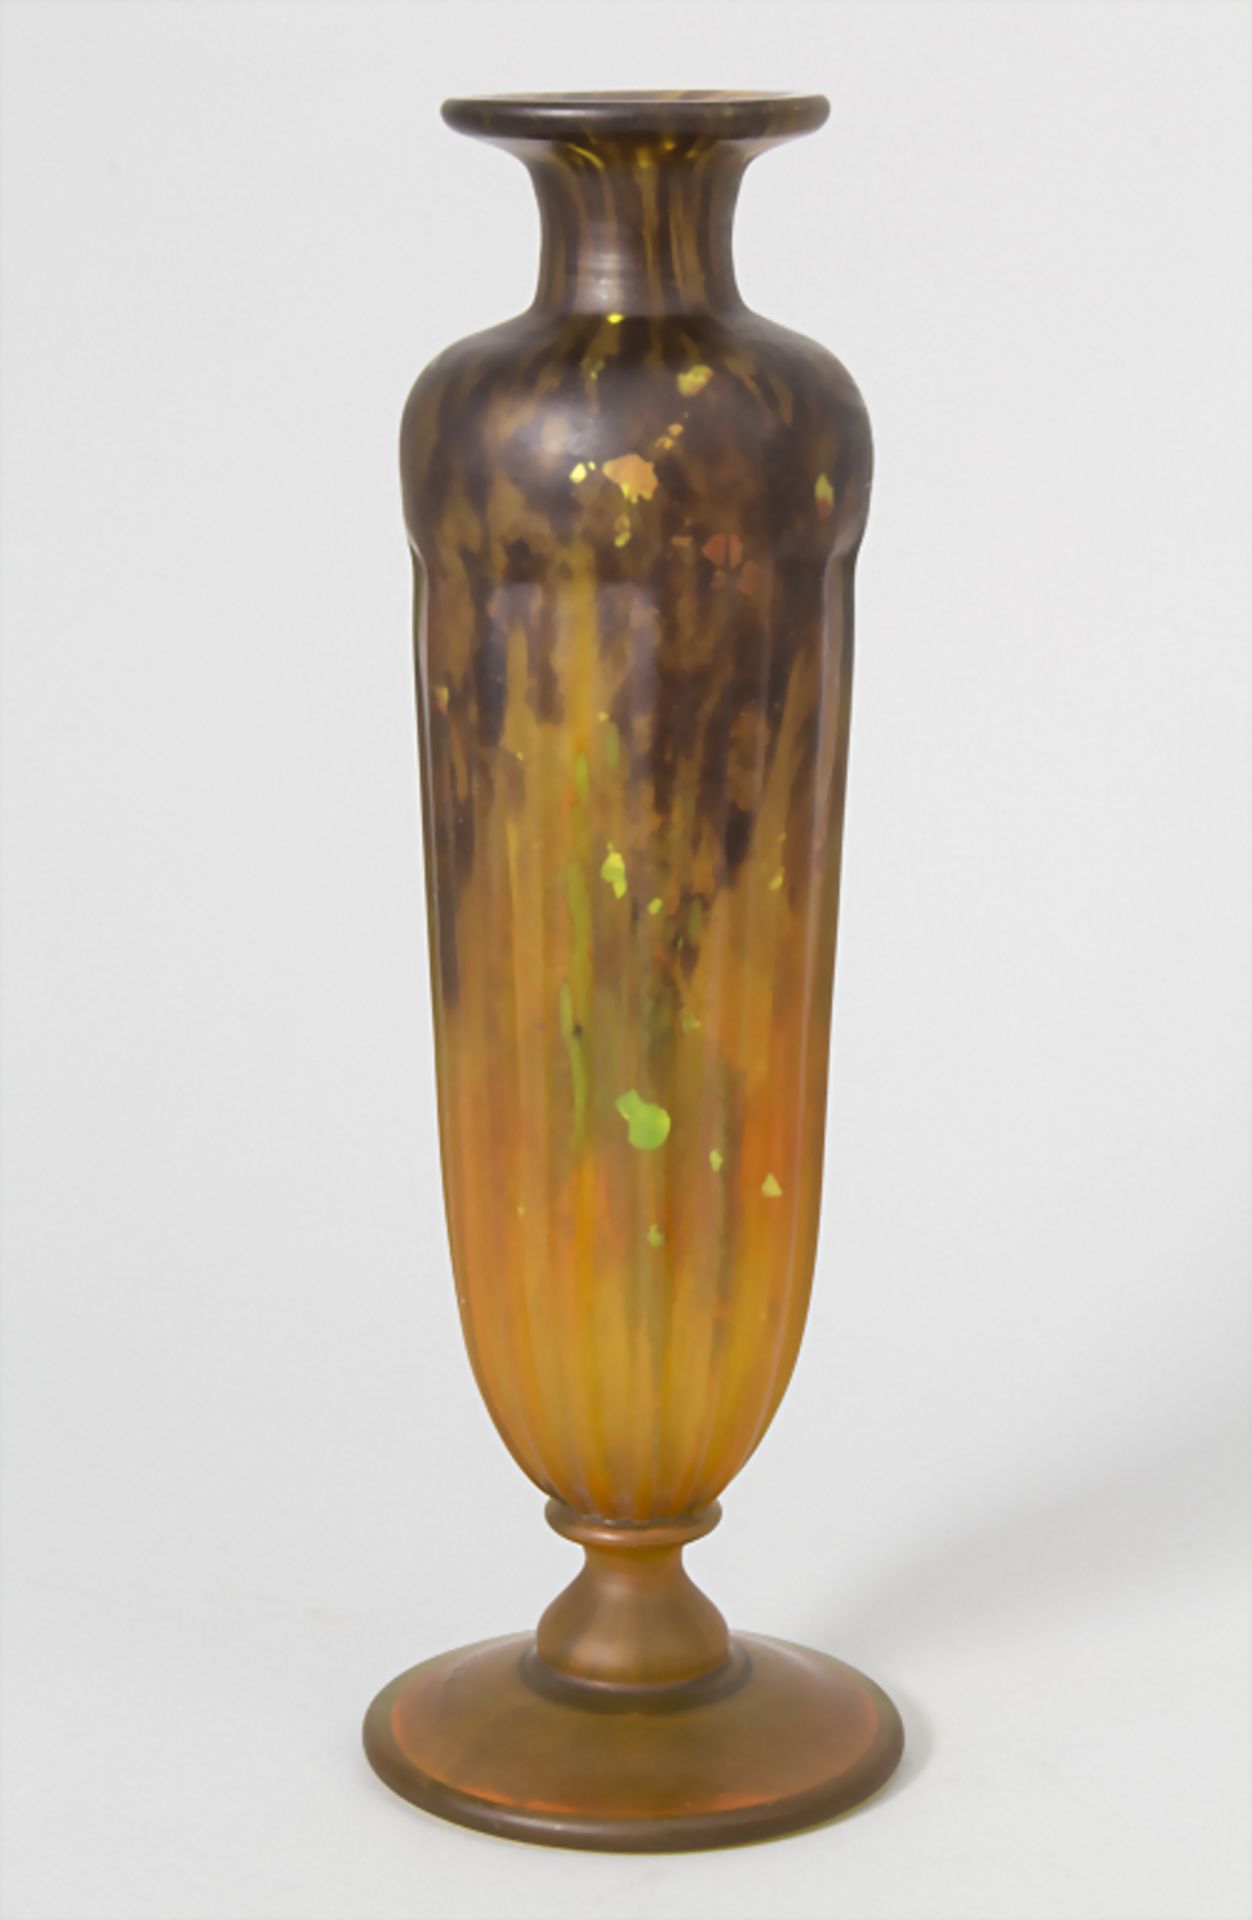 Jugendstil Vase / Art Nouveau glass vase, Daum Frères, Ecole de Nancy, Frankreich, um 1900<